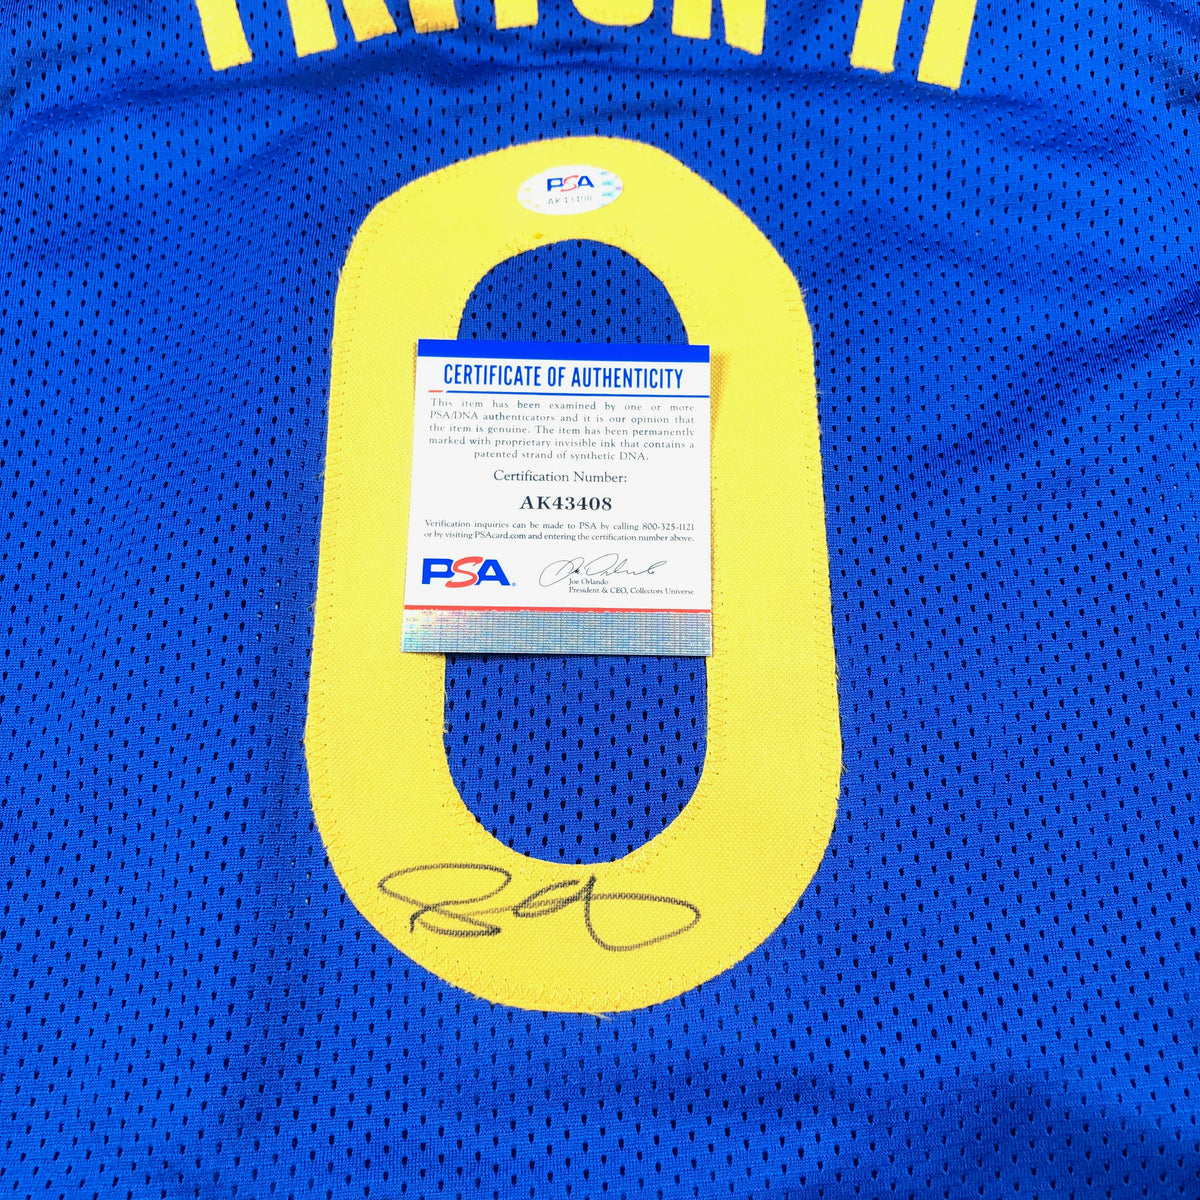 Gary Payton Signed Jersey (JSA & Players Ink)